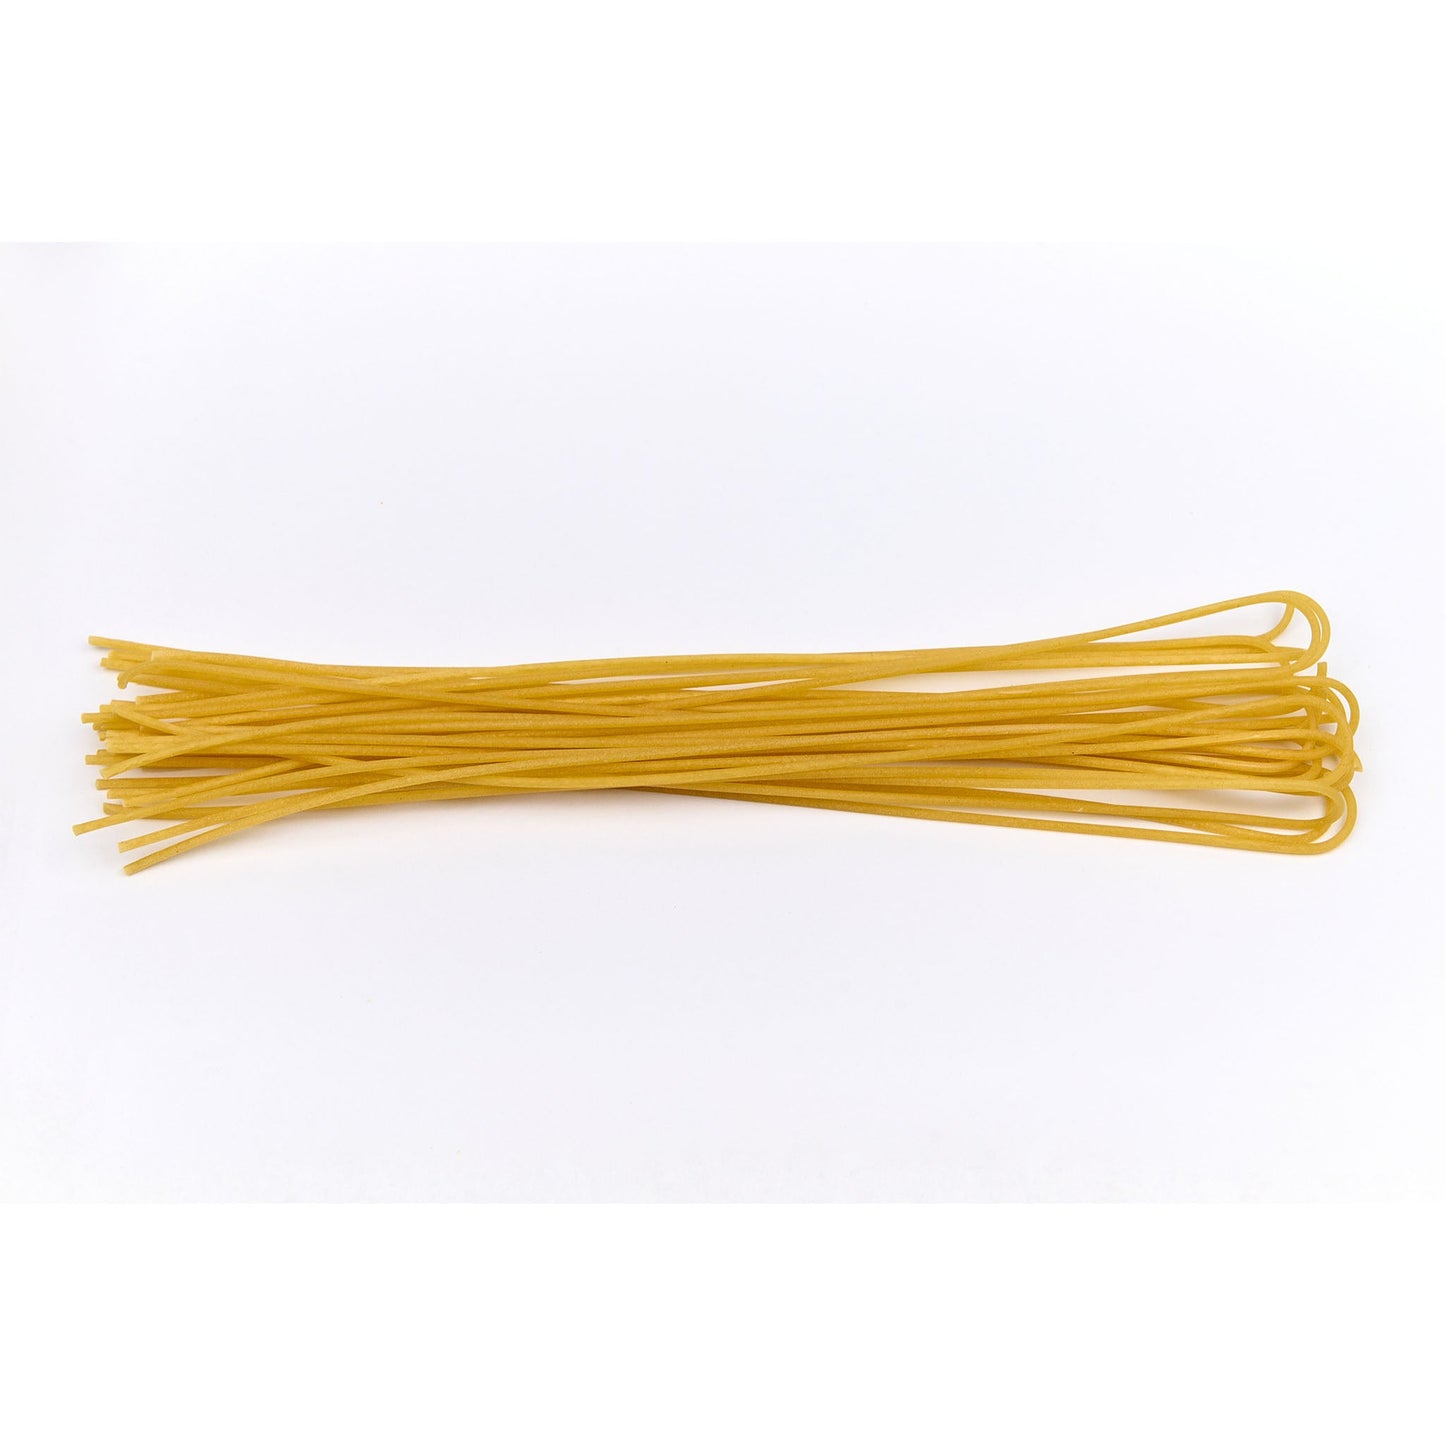 Frischei-Nudeln Spaghetti 2,5 kg